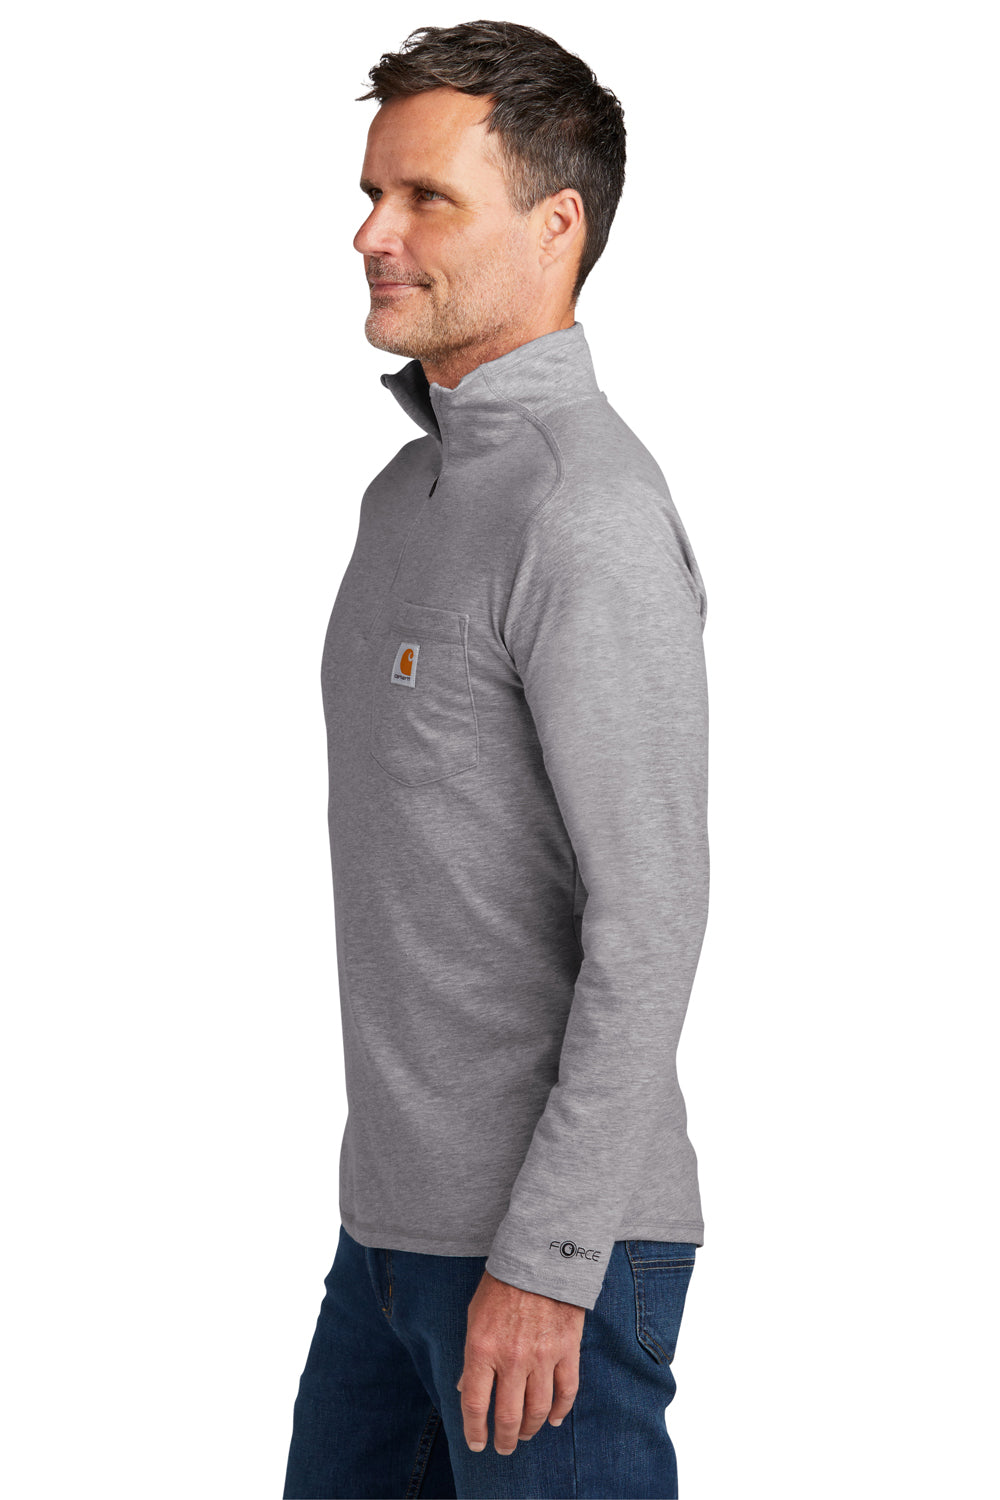 Carhartt CT104255 Mens Force Moisture Wicking 1/4 Zip Long Sleeve T-Shirt w/ Pocket Heather Grey Model Side